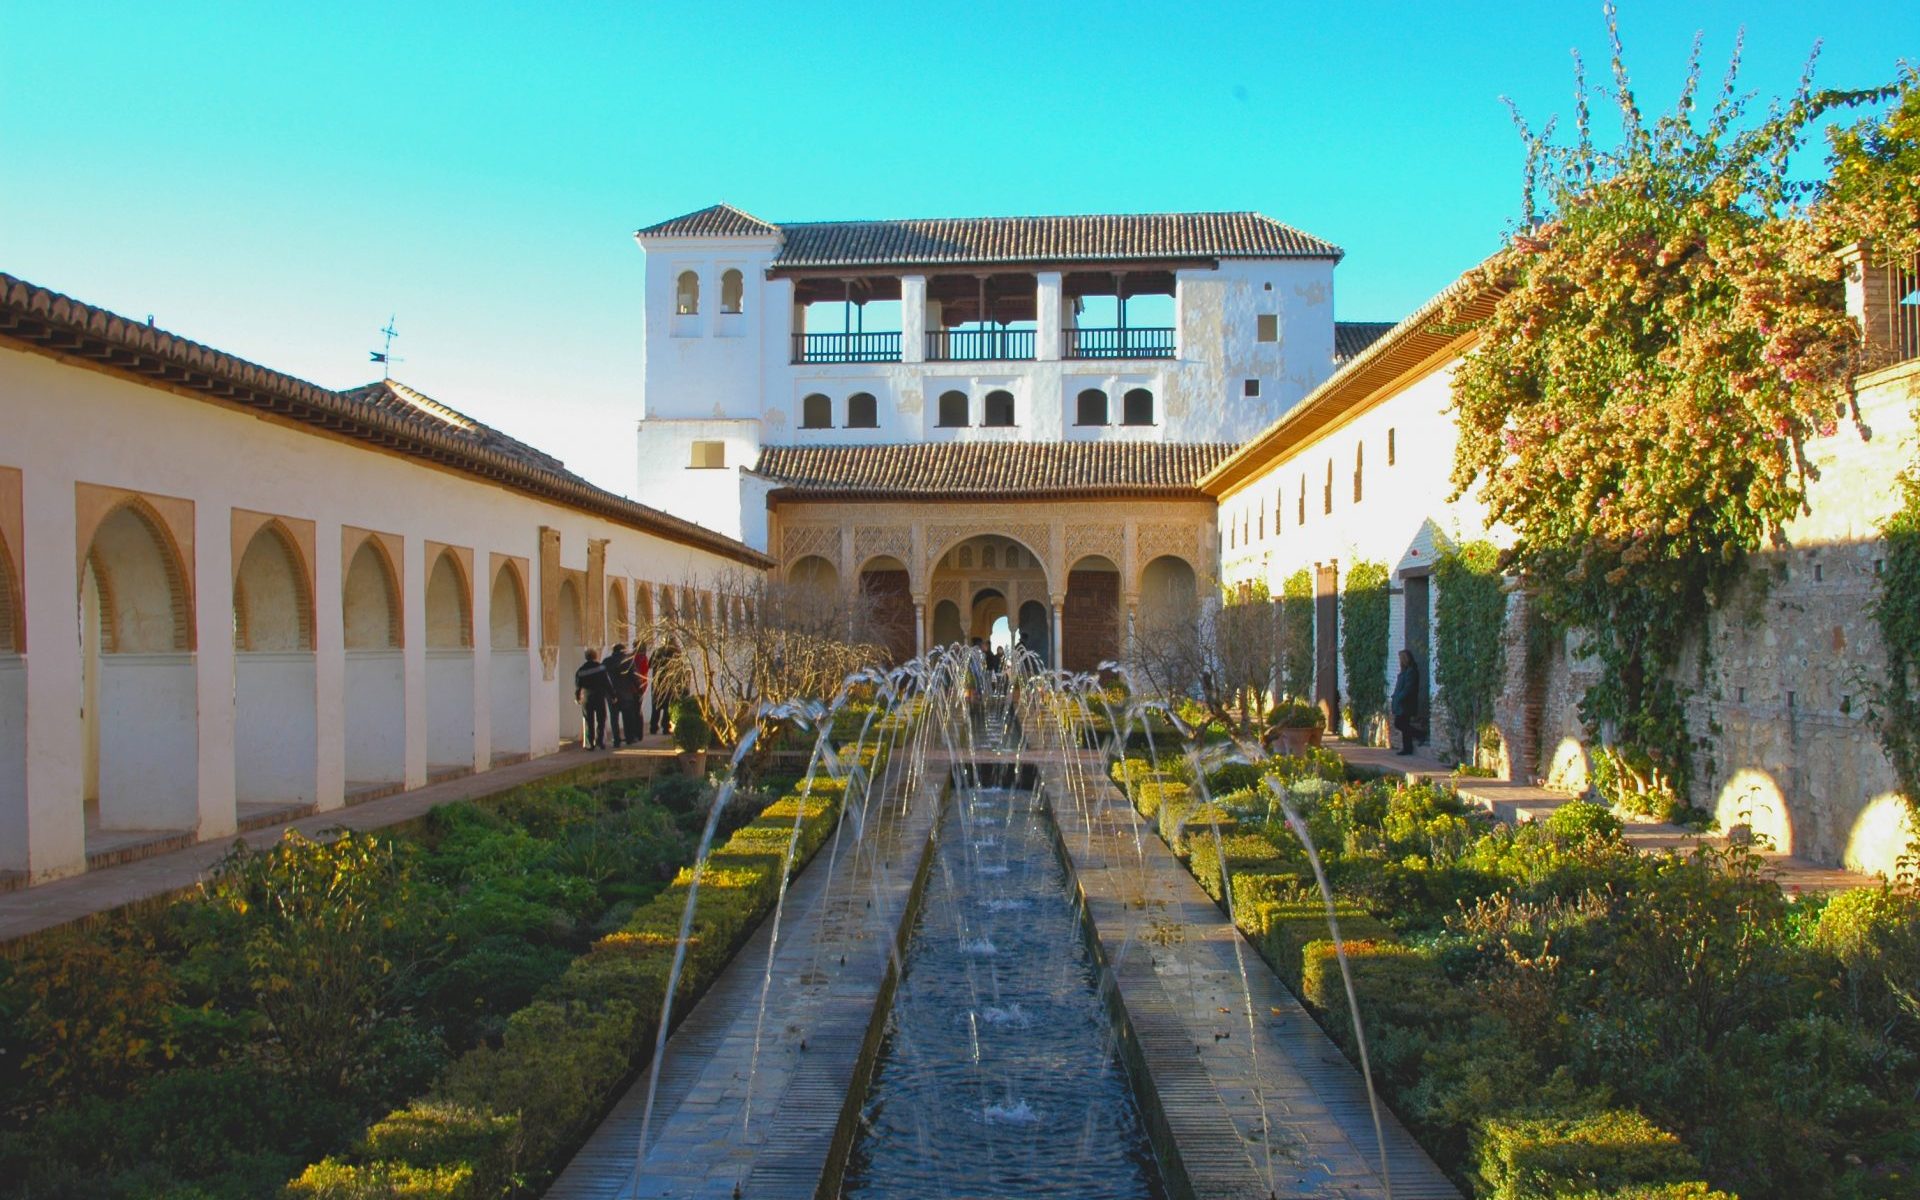 The Generalife of Alhambra, in Granada, Spain